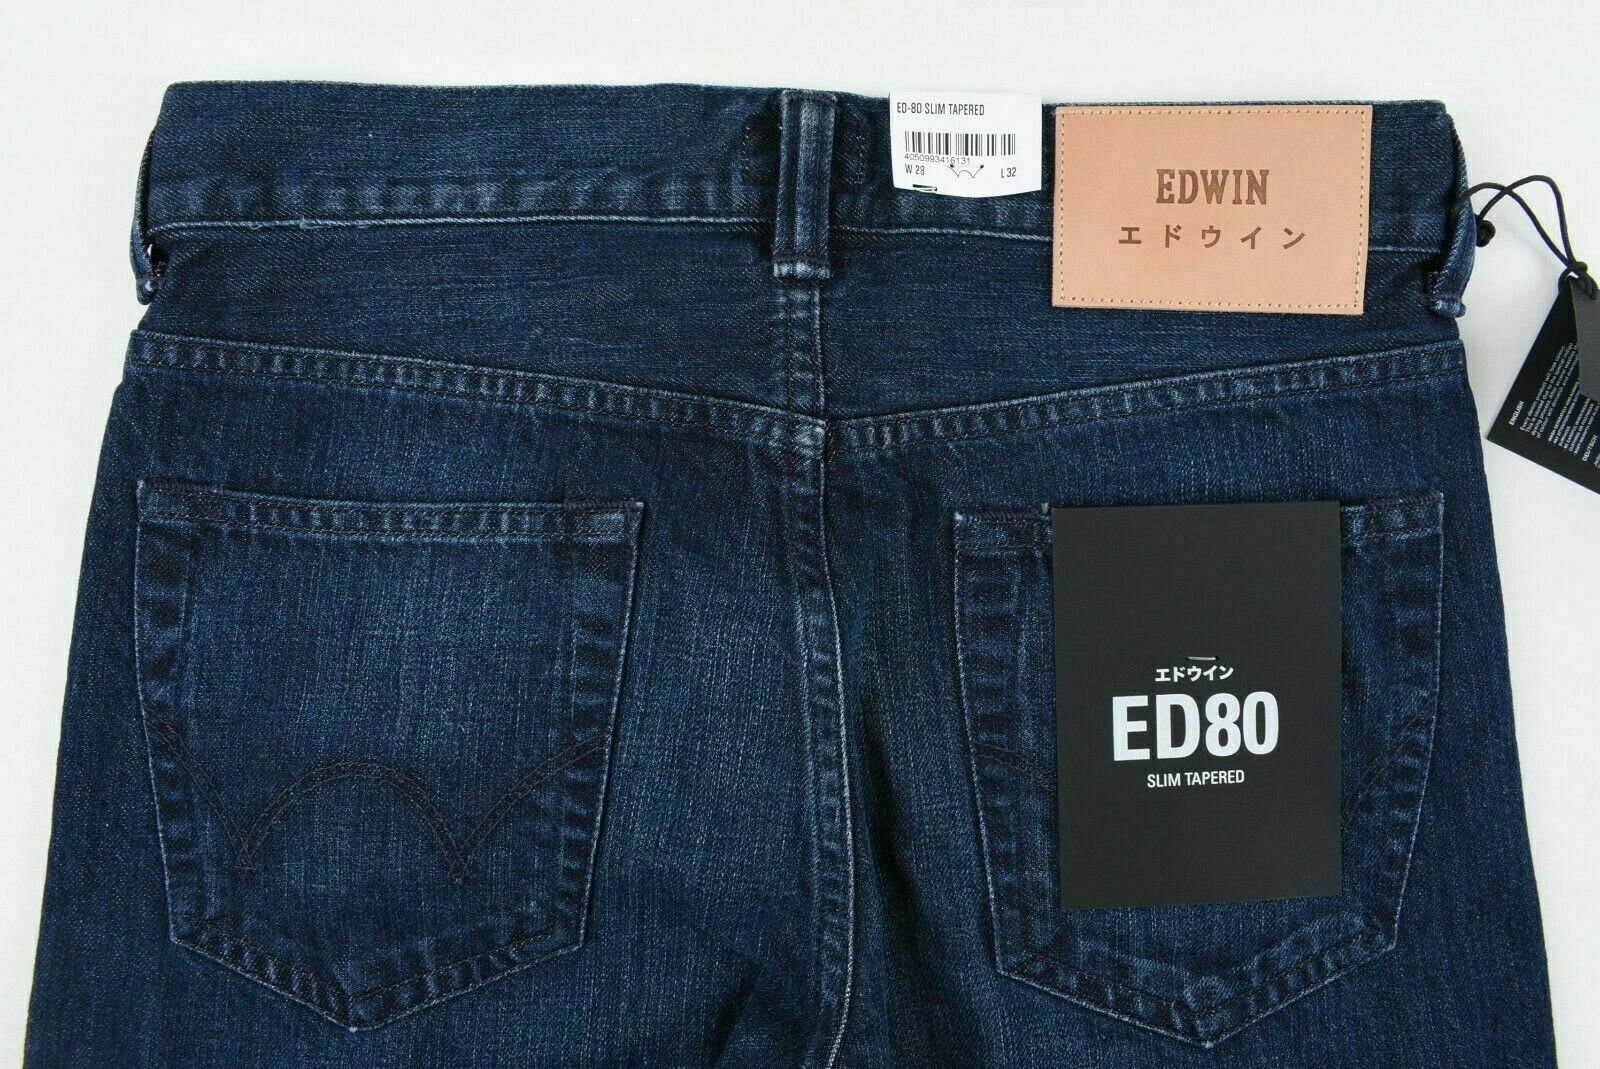 EDWIN Men's Slim Tapered Jeans, Kingston Blue Denim, ED-80 ~ size W28 L32